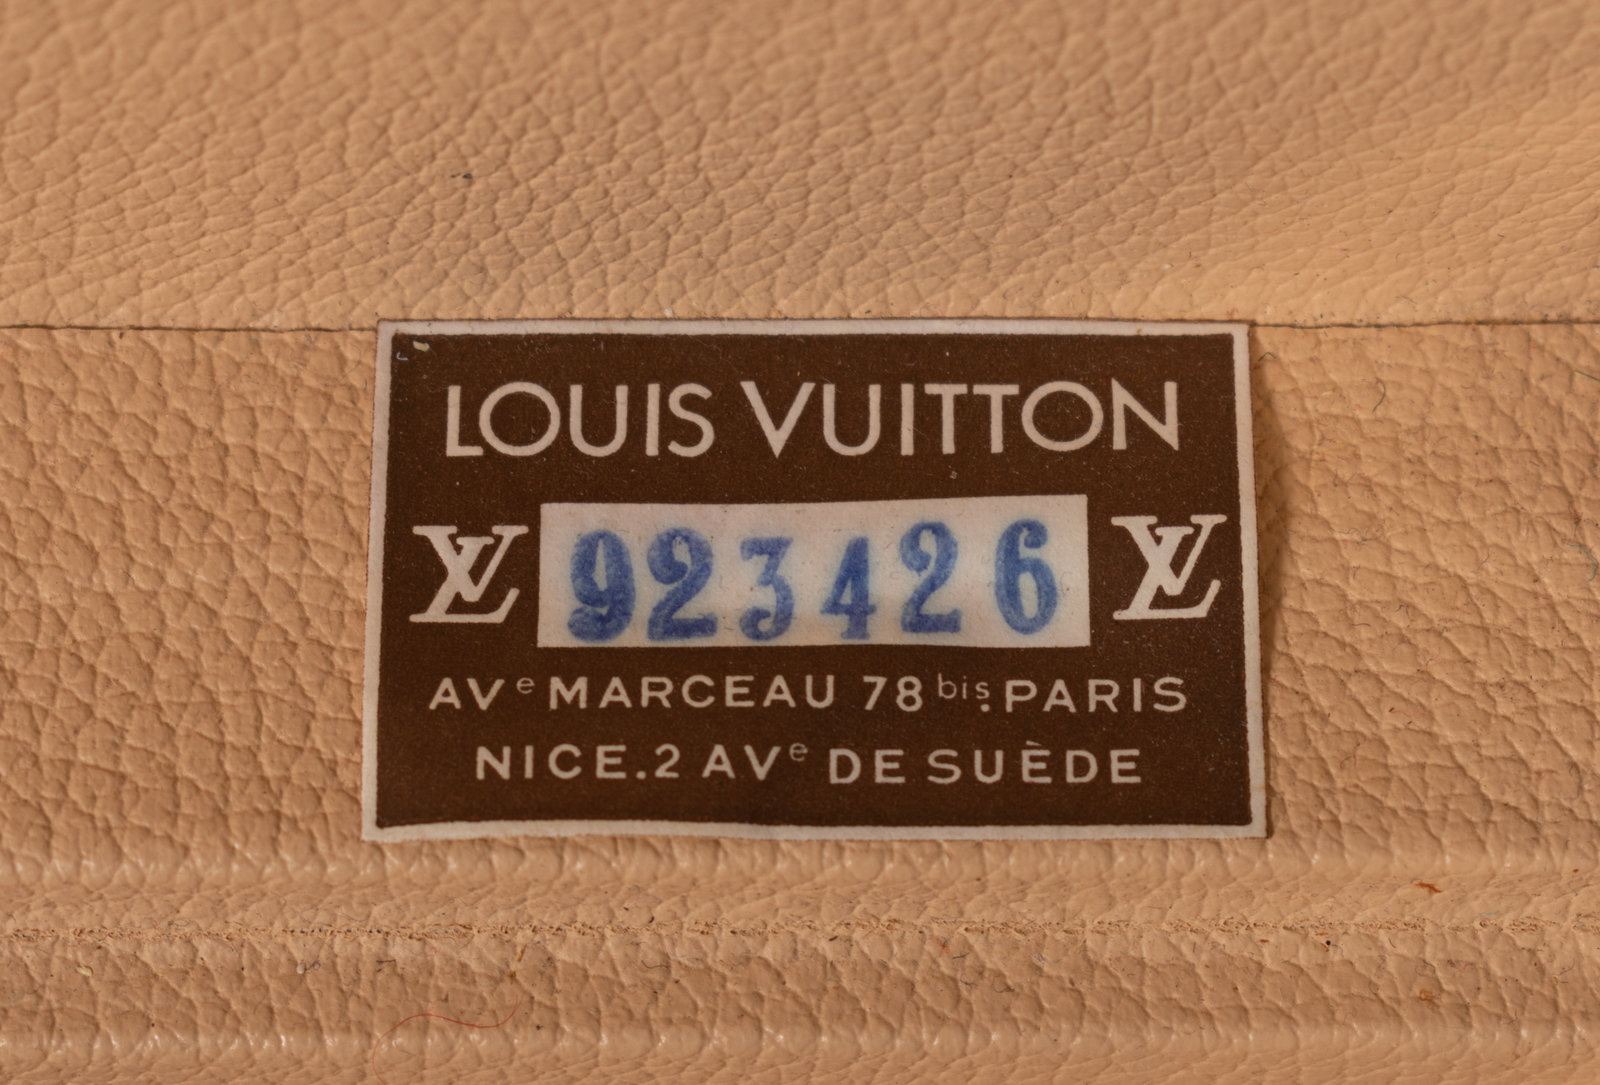 Louis Vuitton Wallets for sale in Denver, Colorado